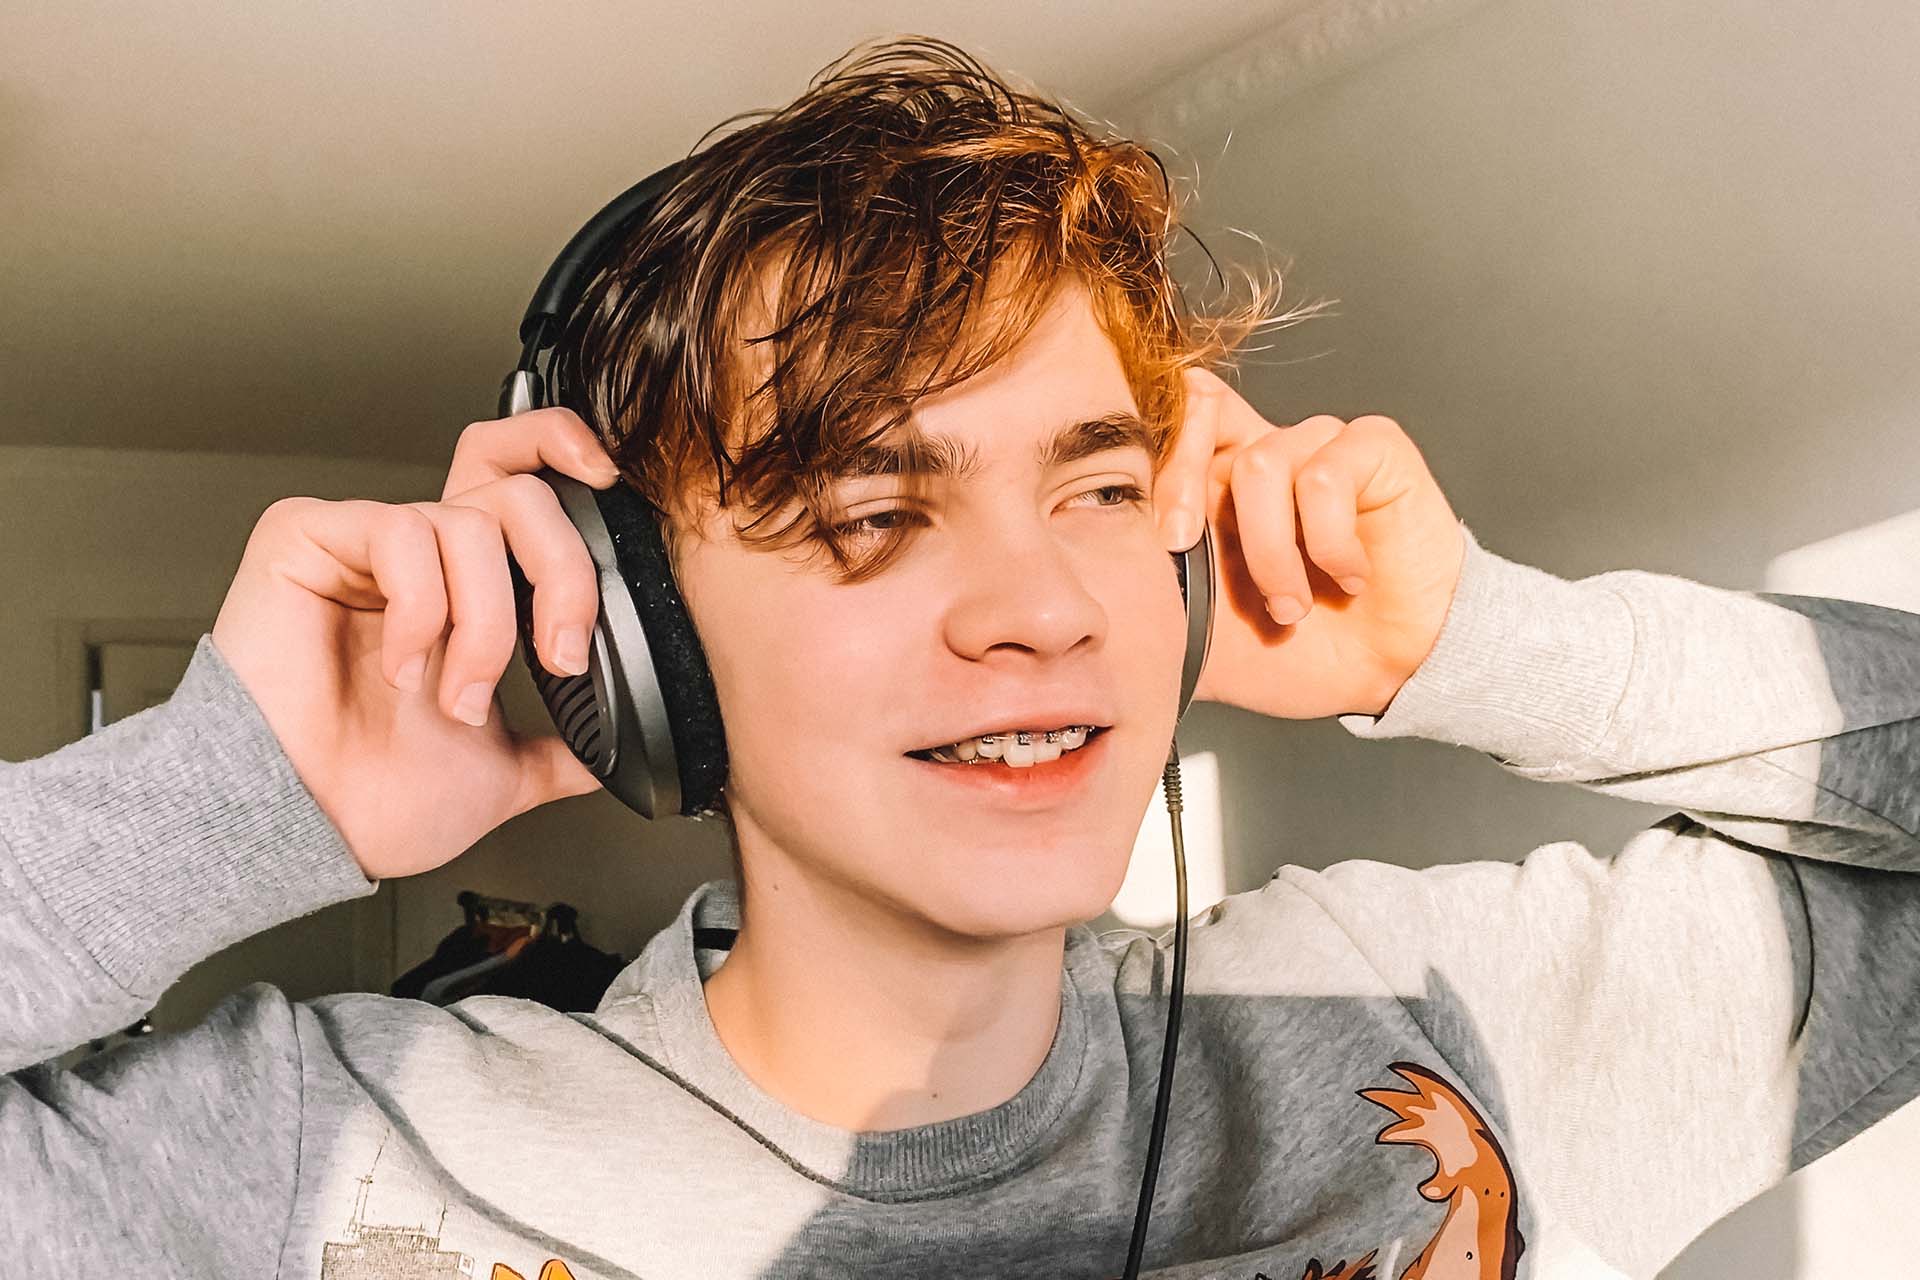 Teen boy with braces listens to music on headphones in Santa Monica, CA